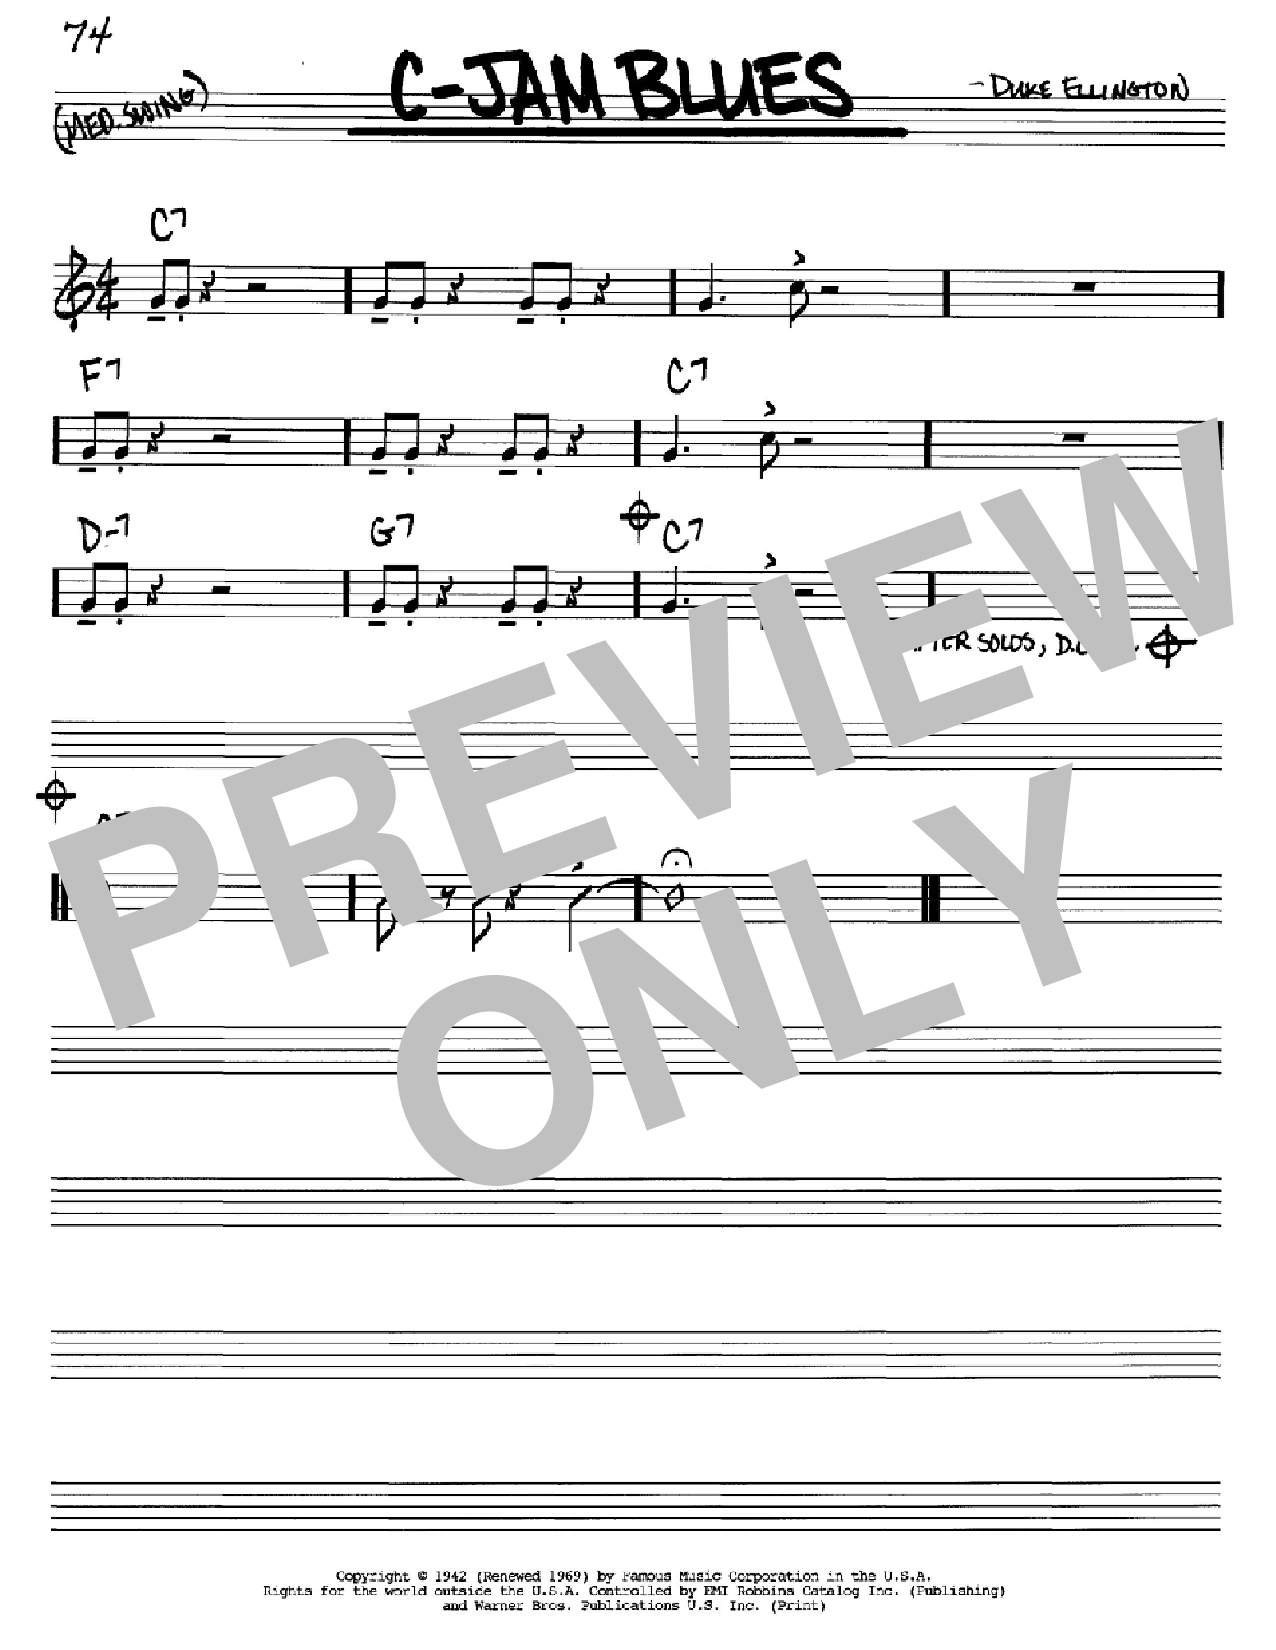 Duke Ellington C-Jam Blues Sheet Music Notes & Chords for Solo Guitar Tab - Download or Print PDF